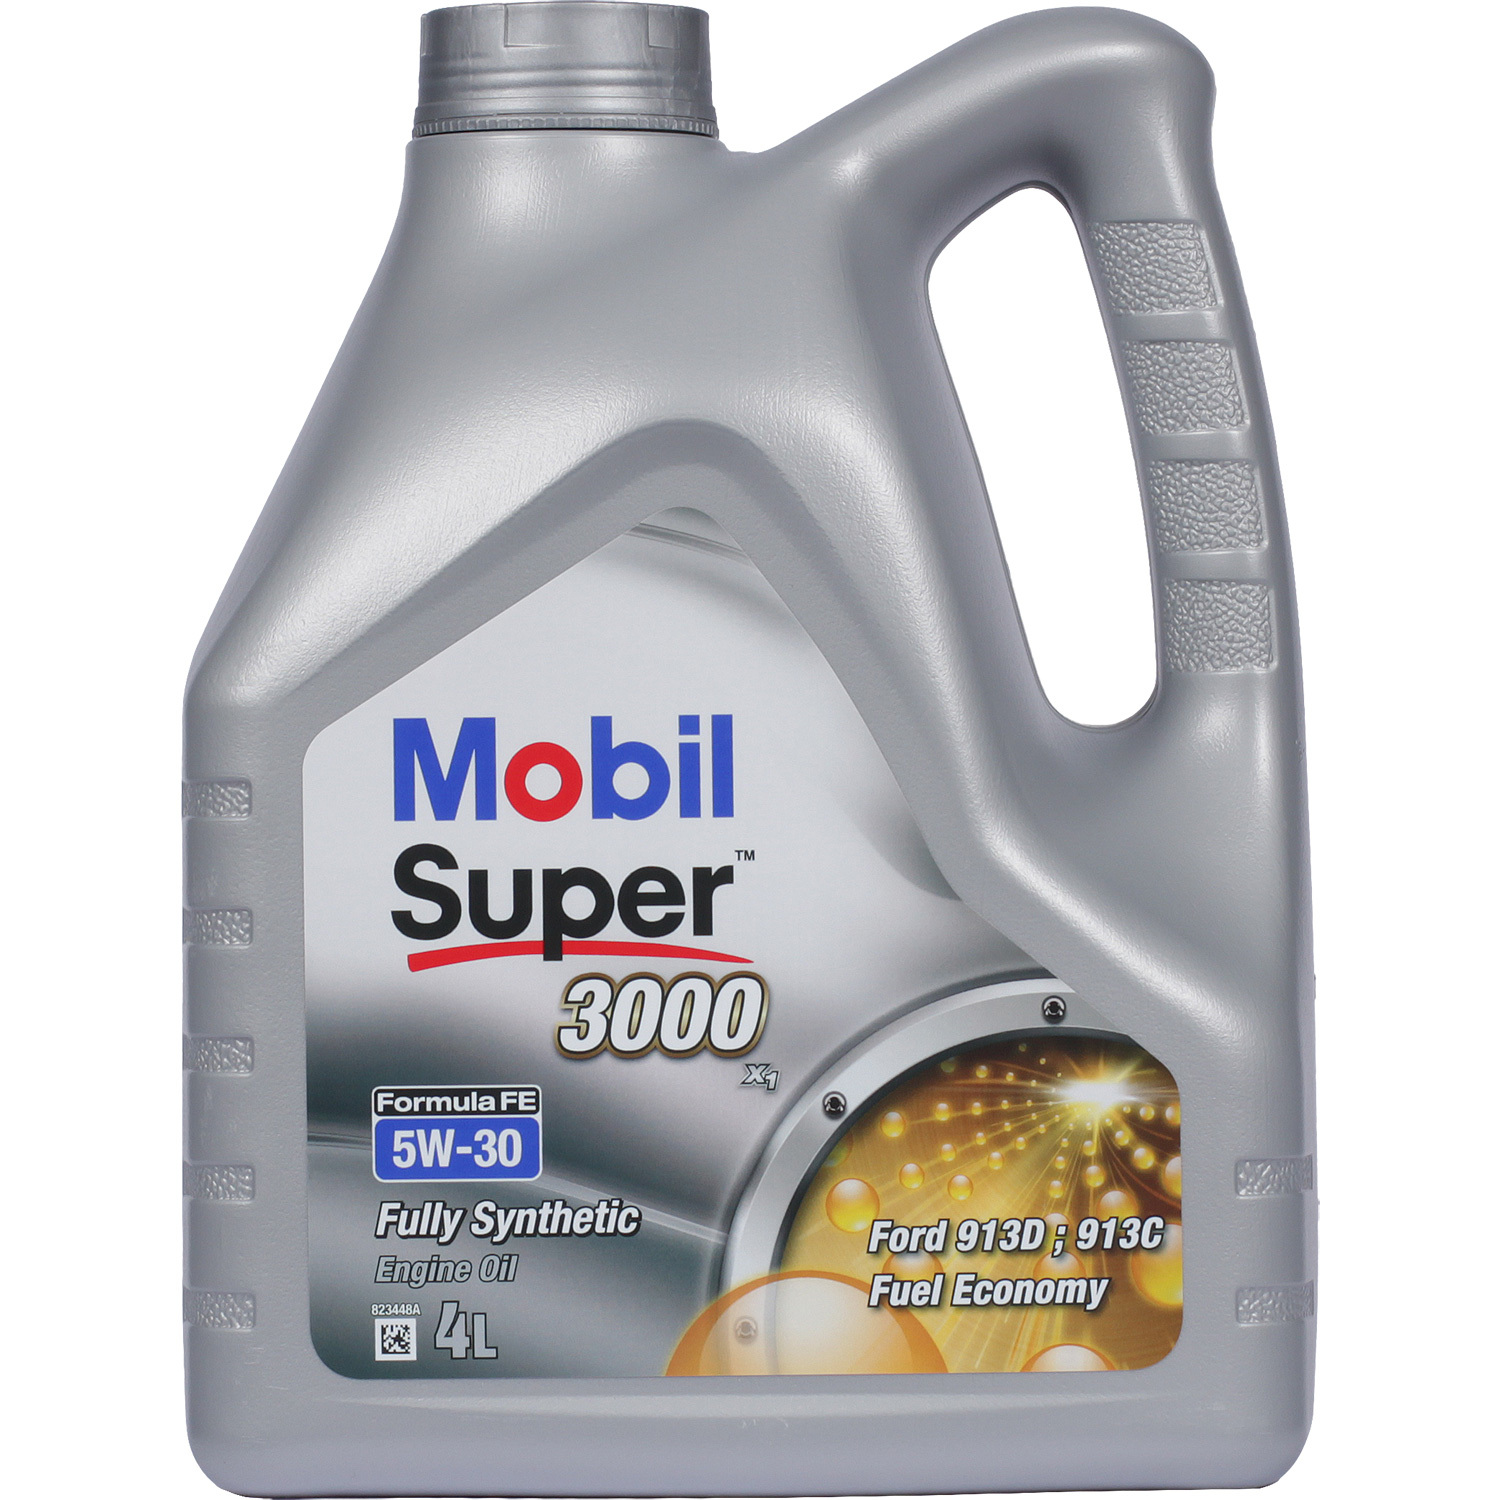 Mobil Моторное масло Mobil Super 3000 X1 Formula FE 5W-30, 4 л цена и фото